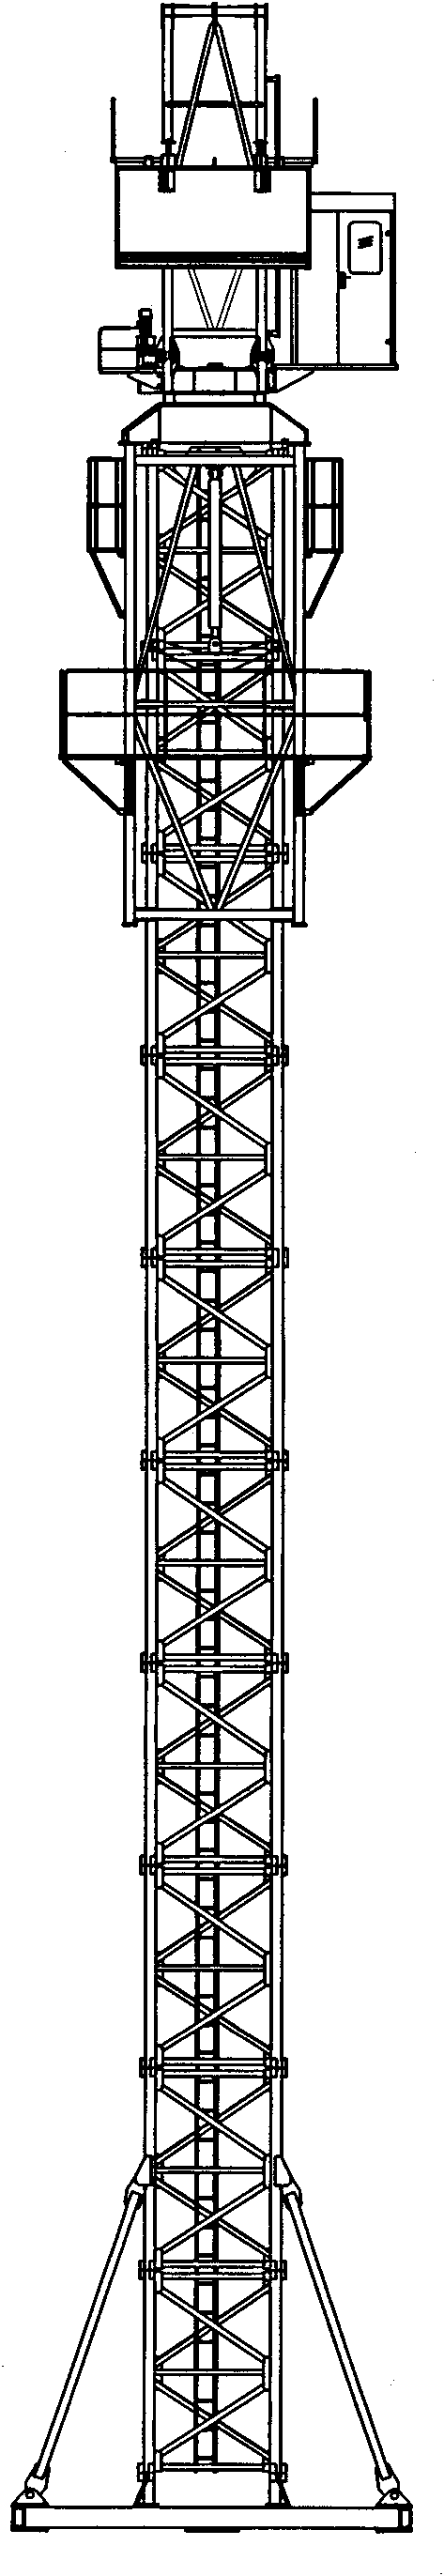 Flat-head tower crane